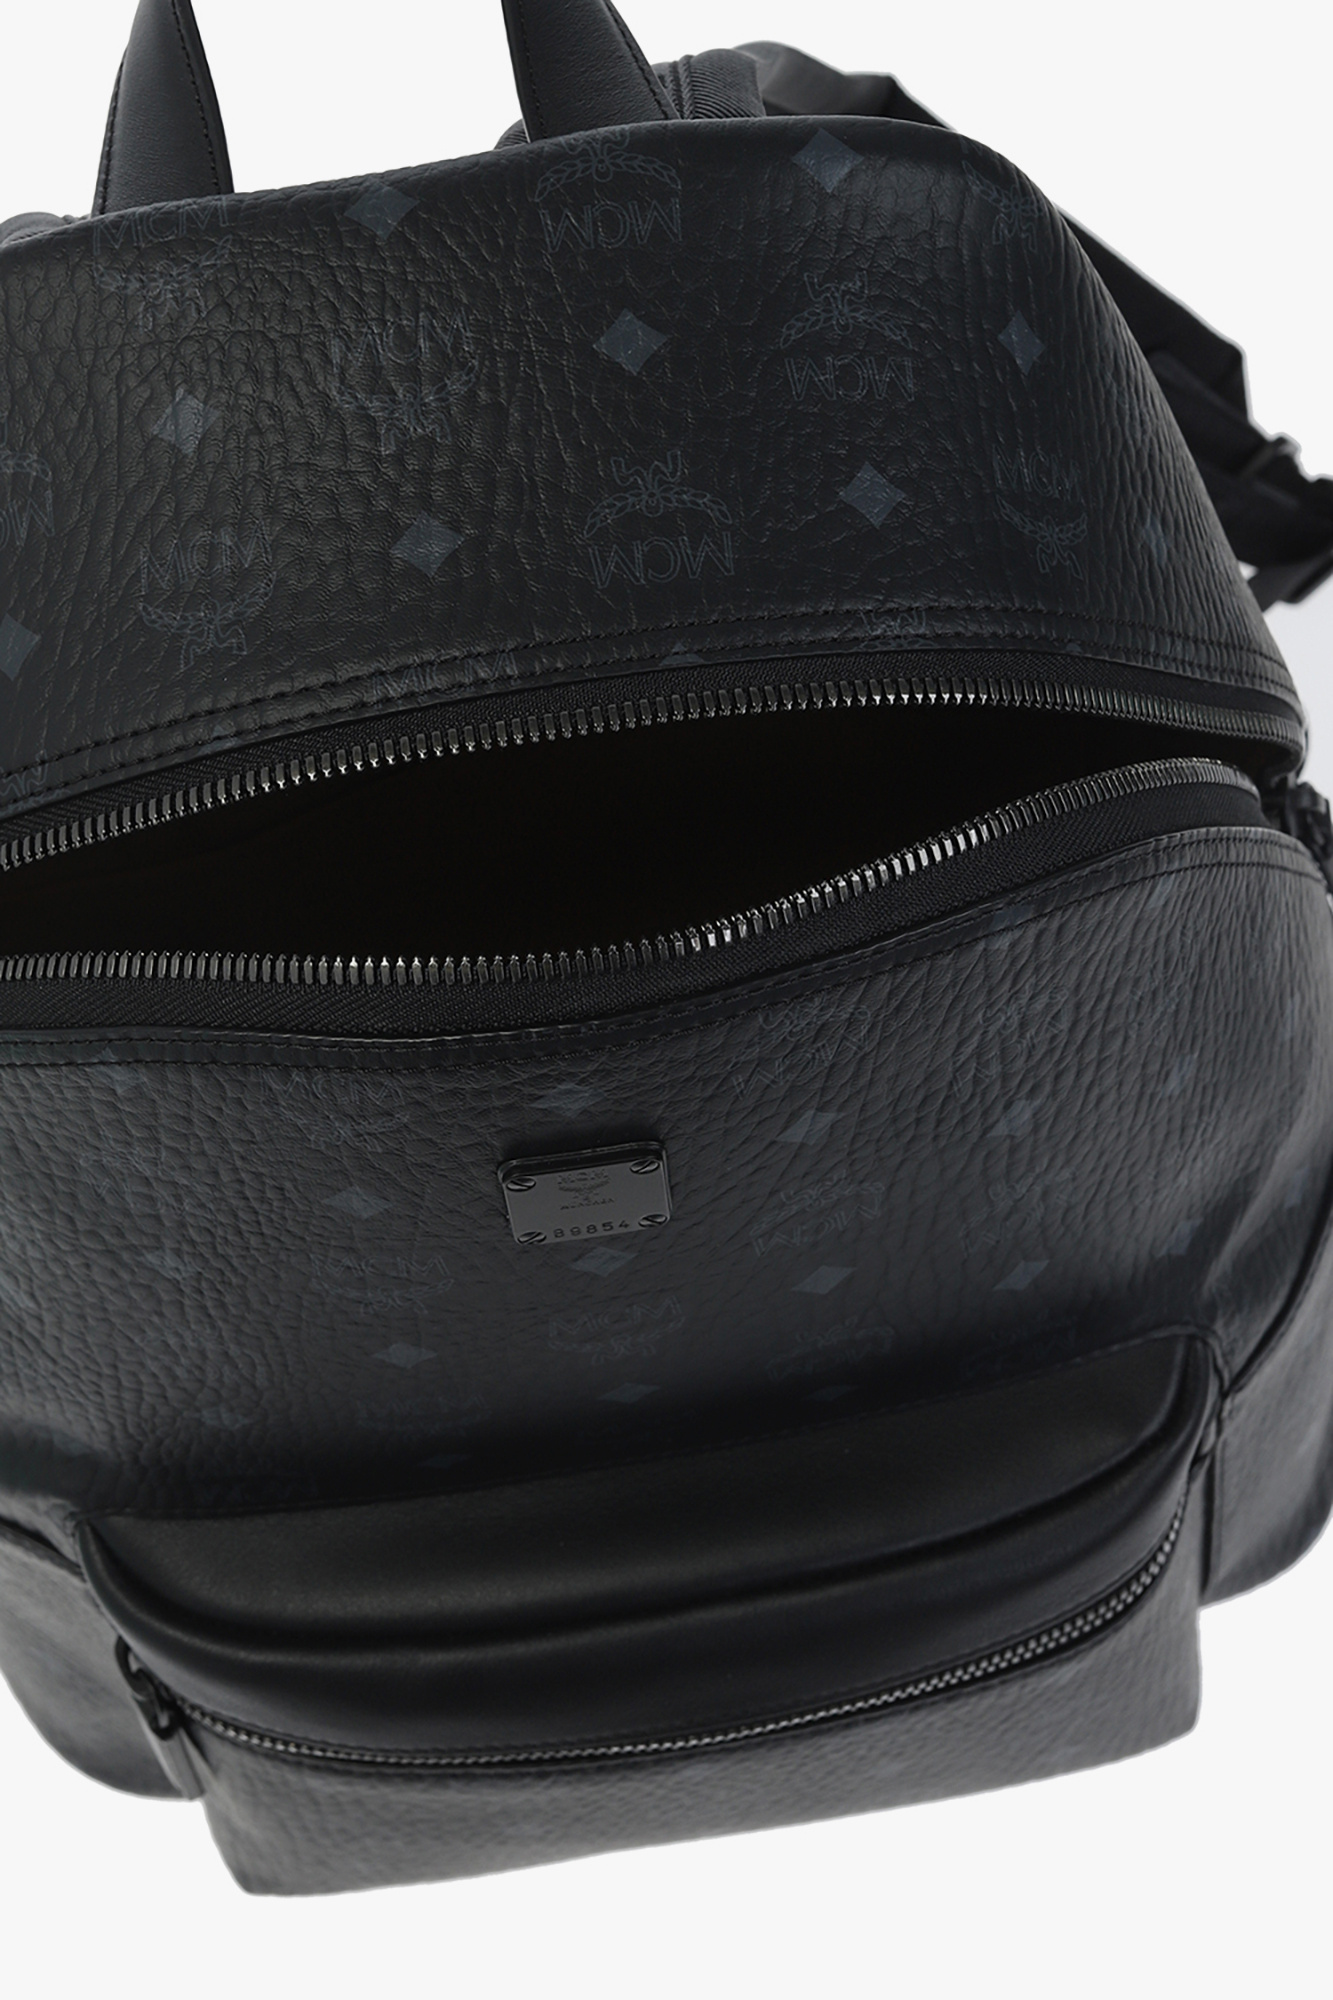 MCM Black Leather Embossed XL Tote Bag